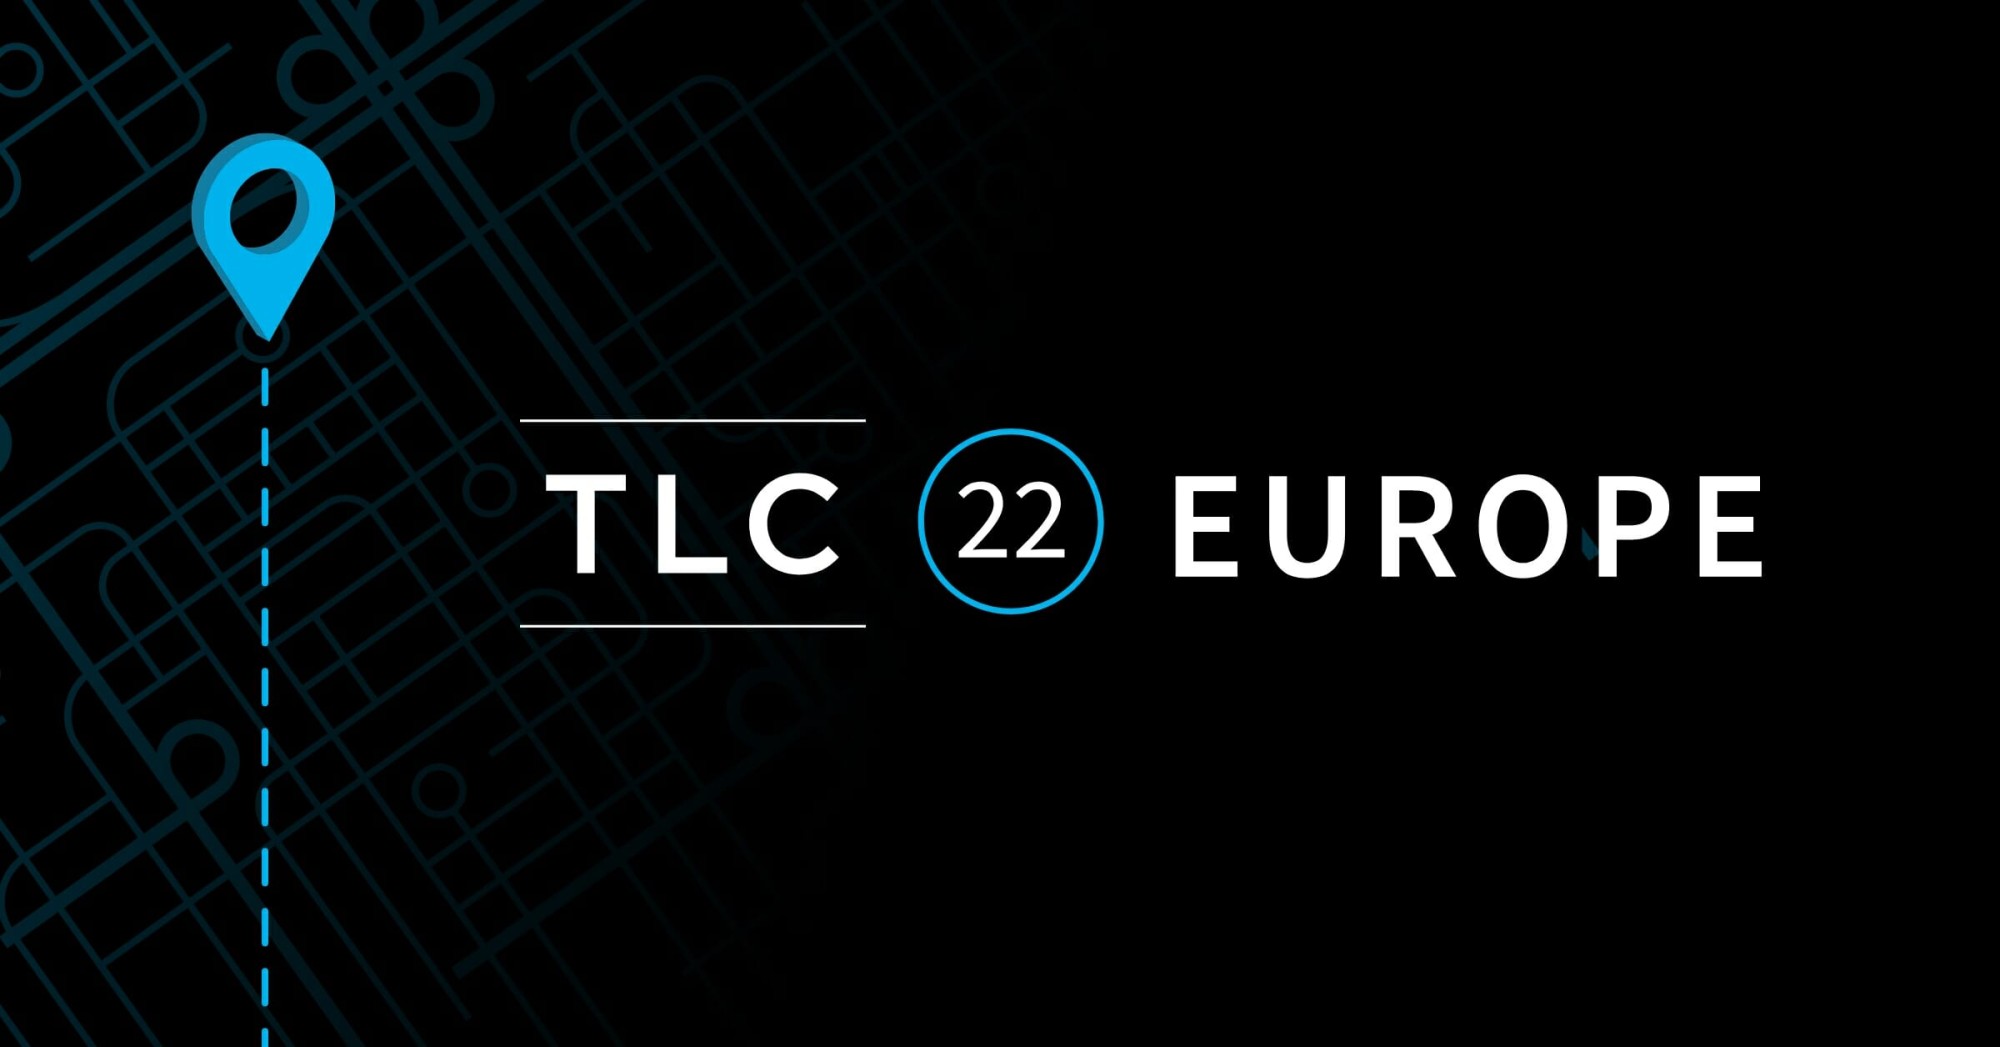 TLC Europe 2022 logo on a black background